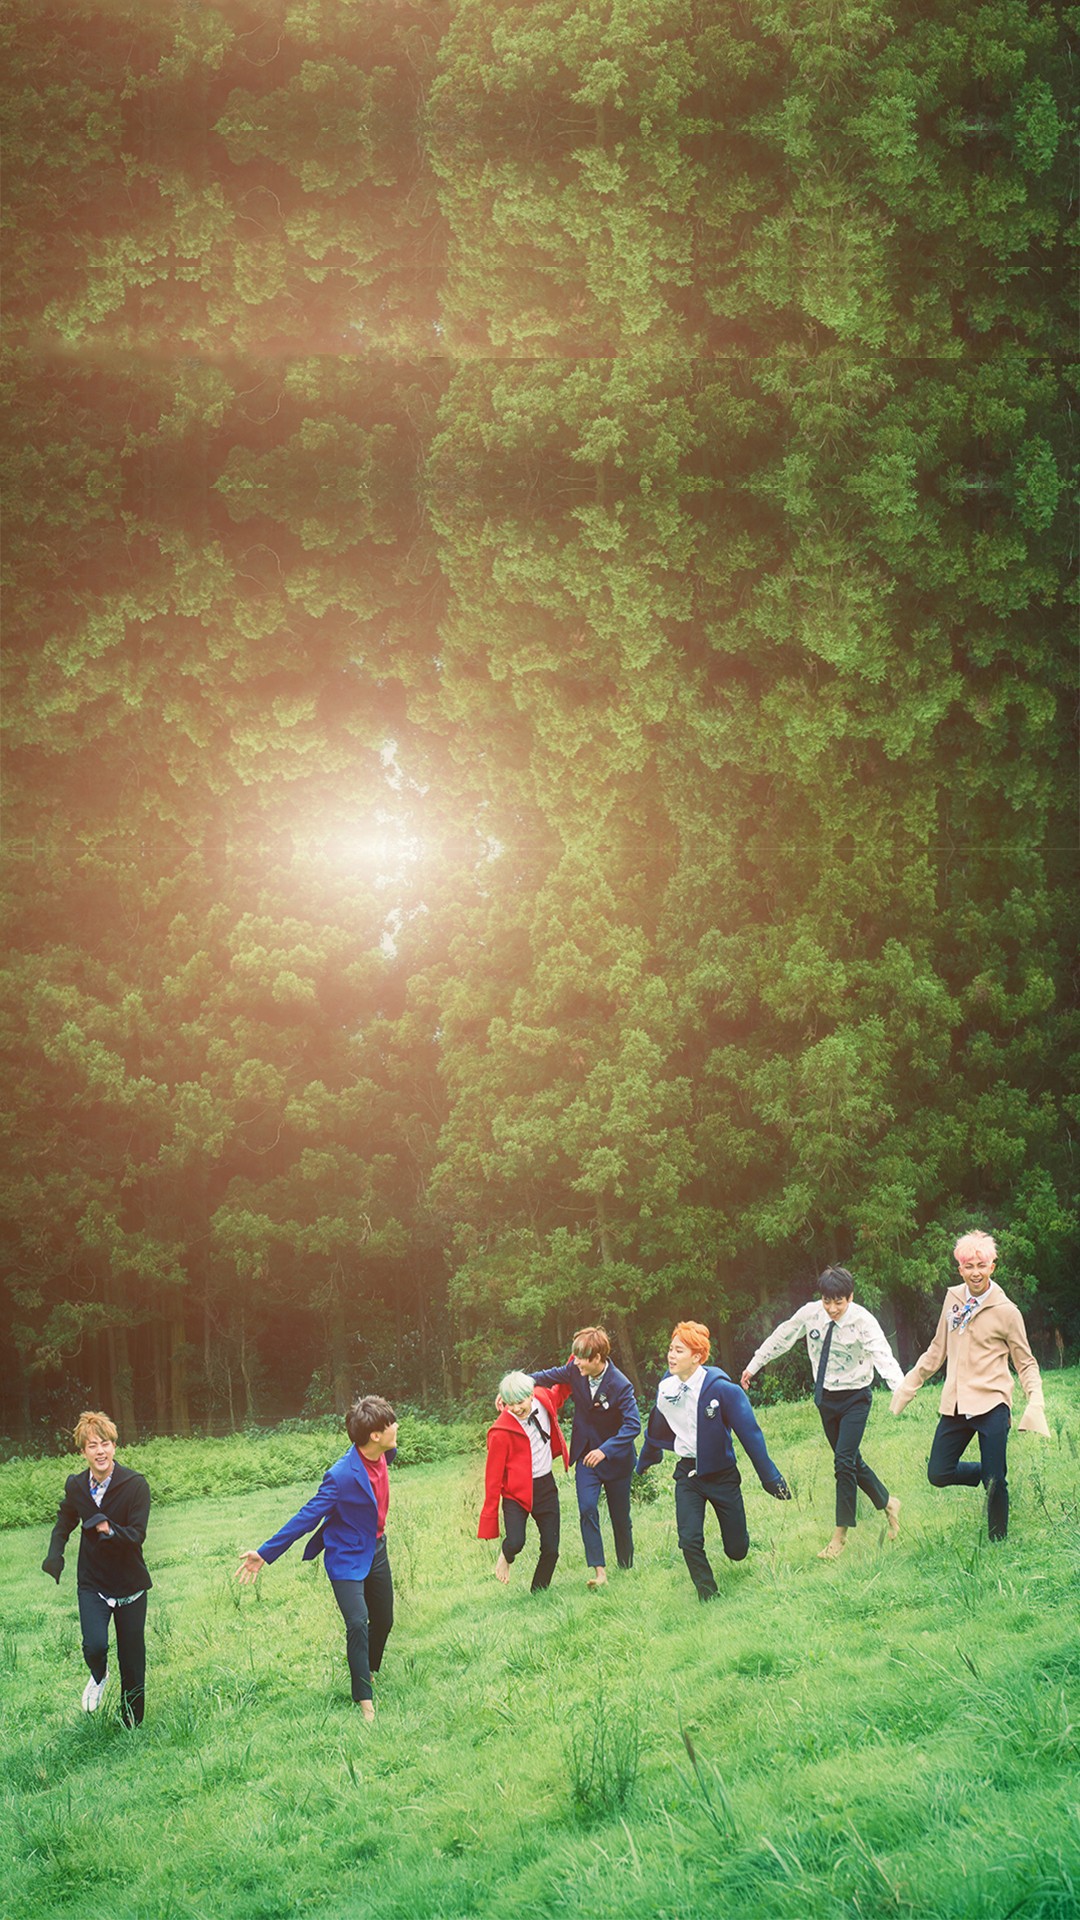 BTS wallpaper Download free beautiful High Resolution